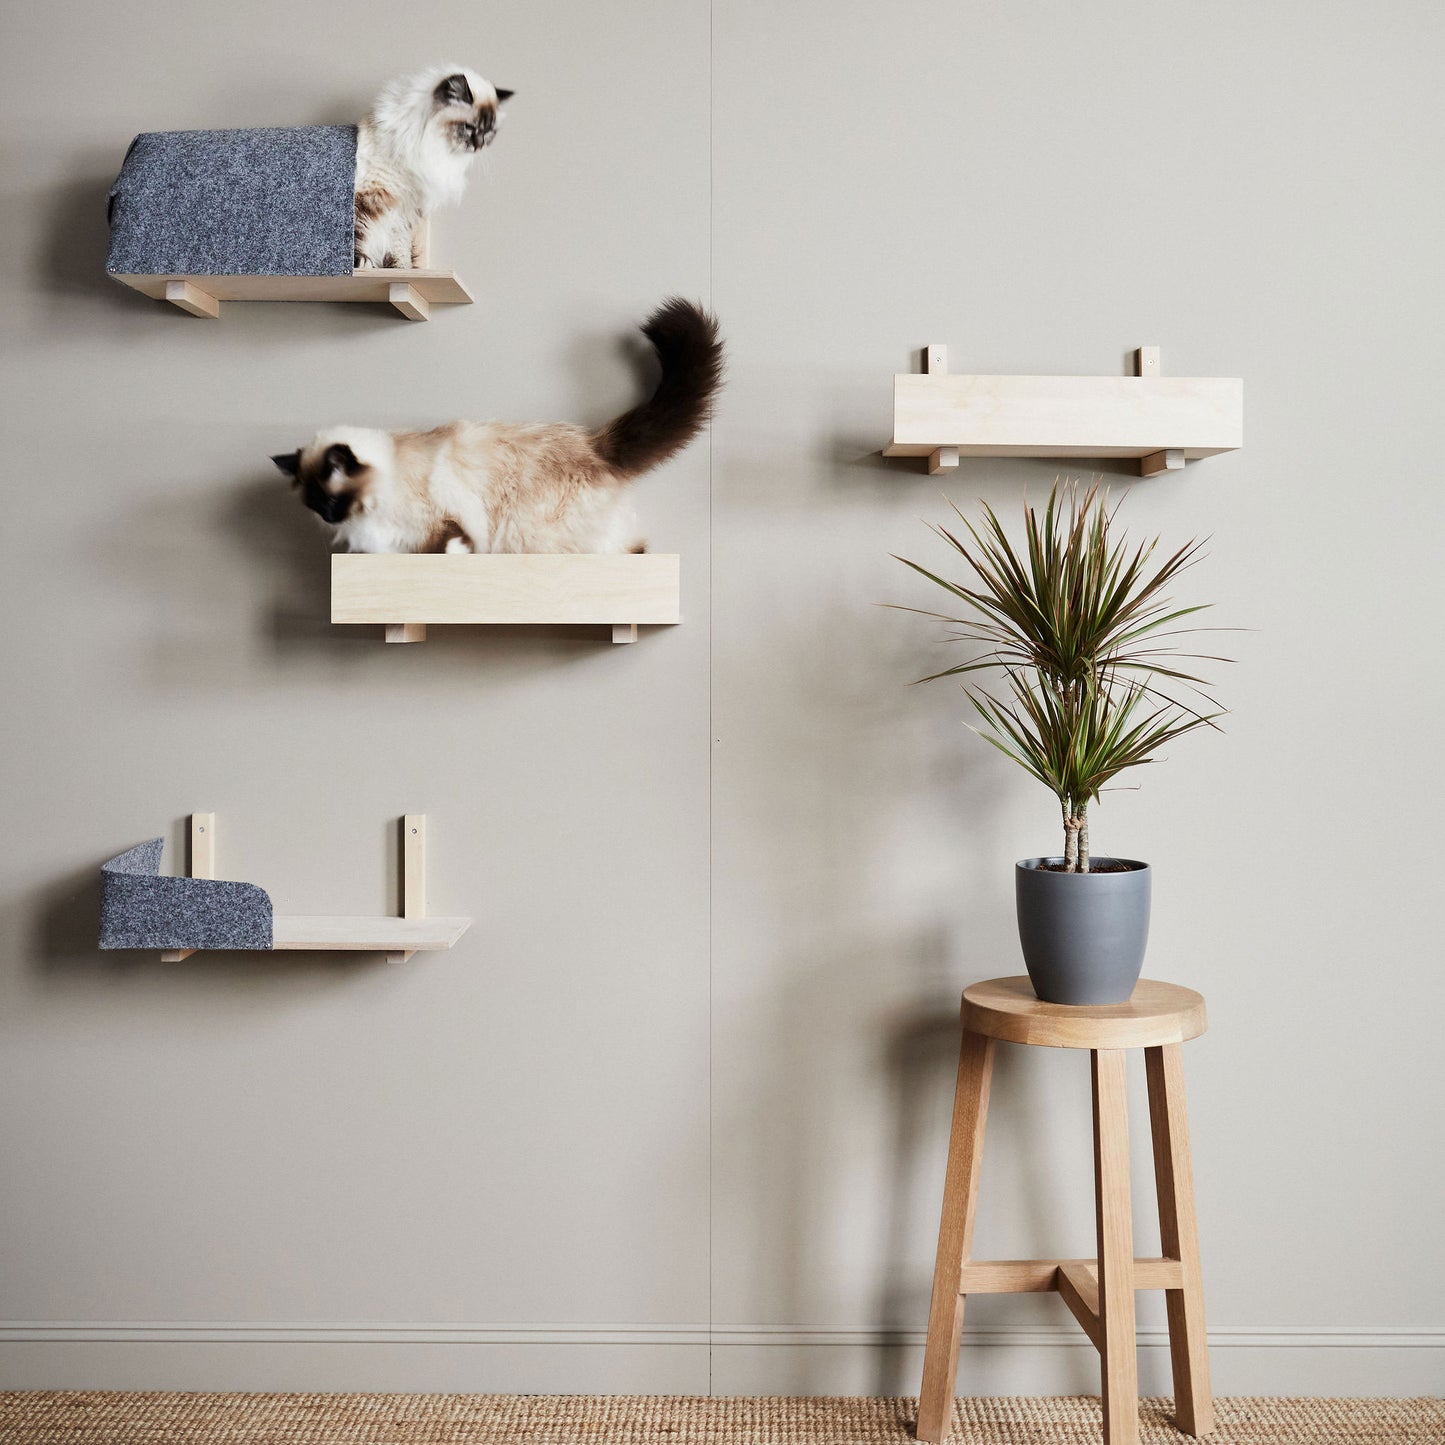 Kissapuu cat wall shelf, felt edge